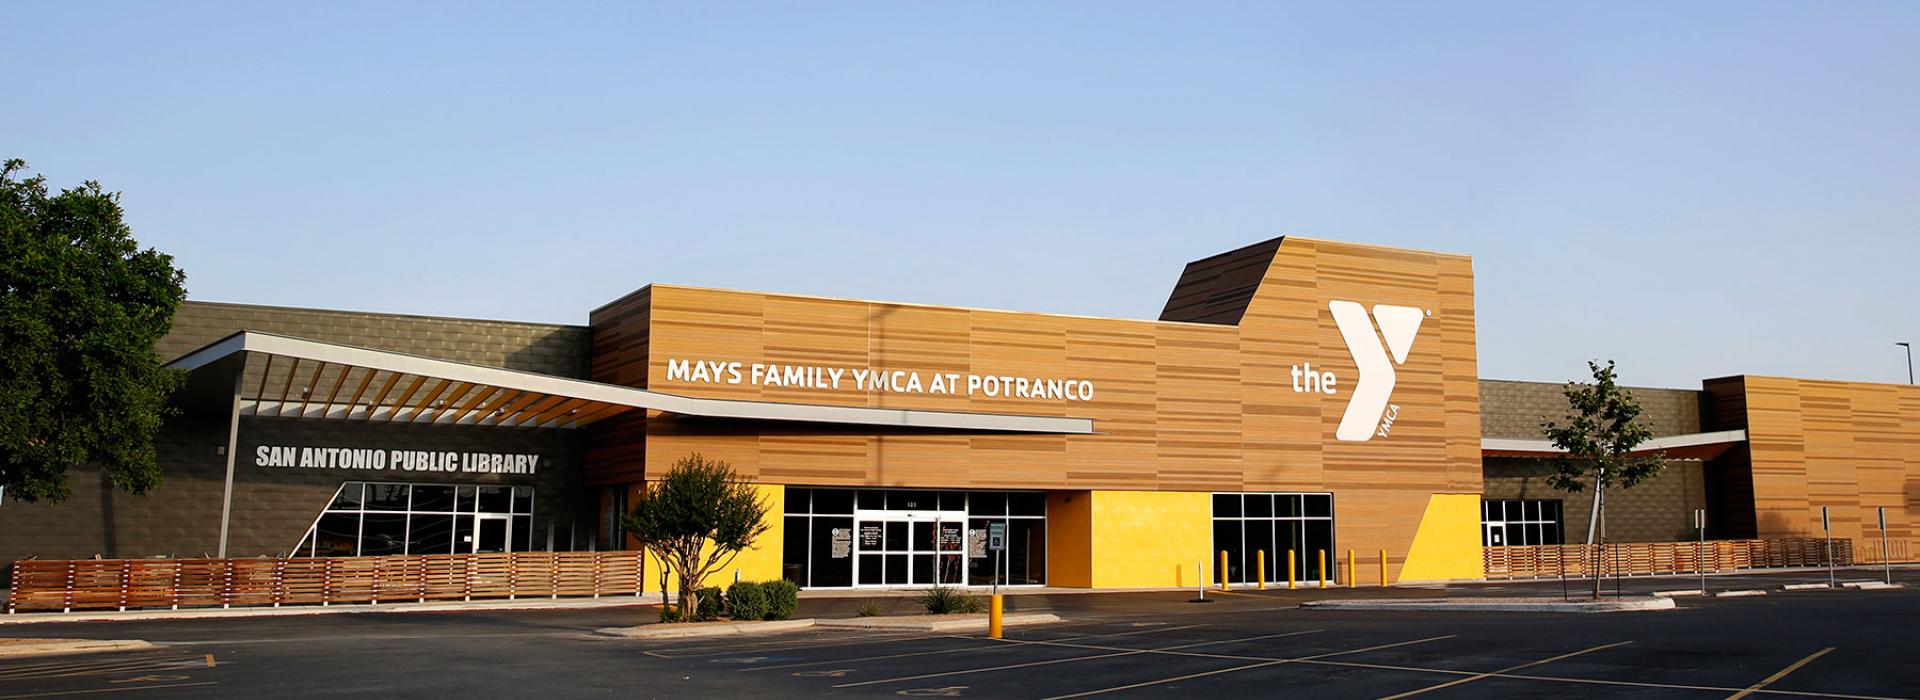 Mays Family YMCA at Potranco | YMCA of Greater San Antonio